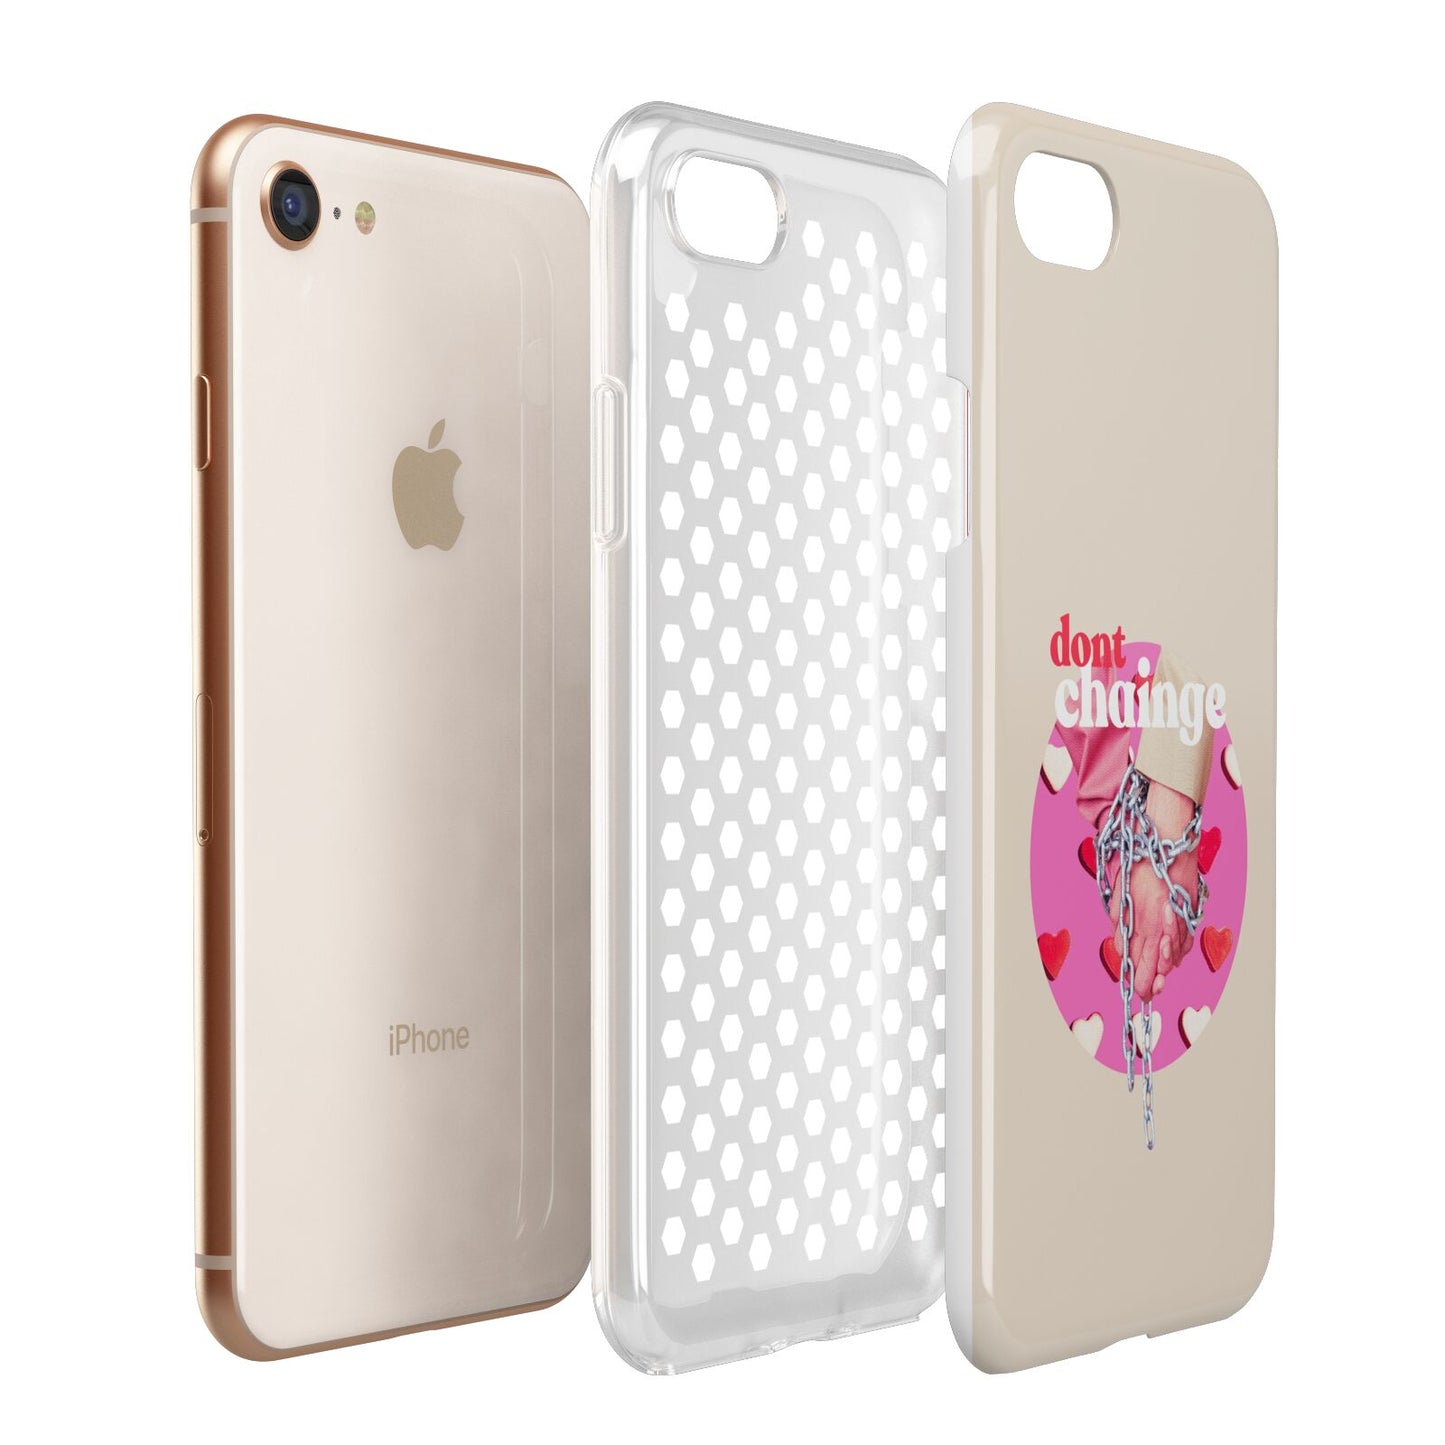 Retro Valentines Quote Apple iPhone 7 8 3D Tough Case Expanded View